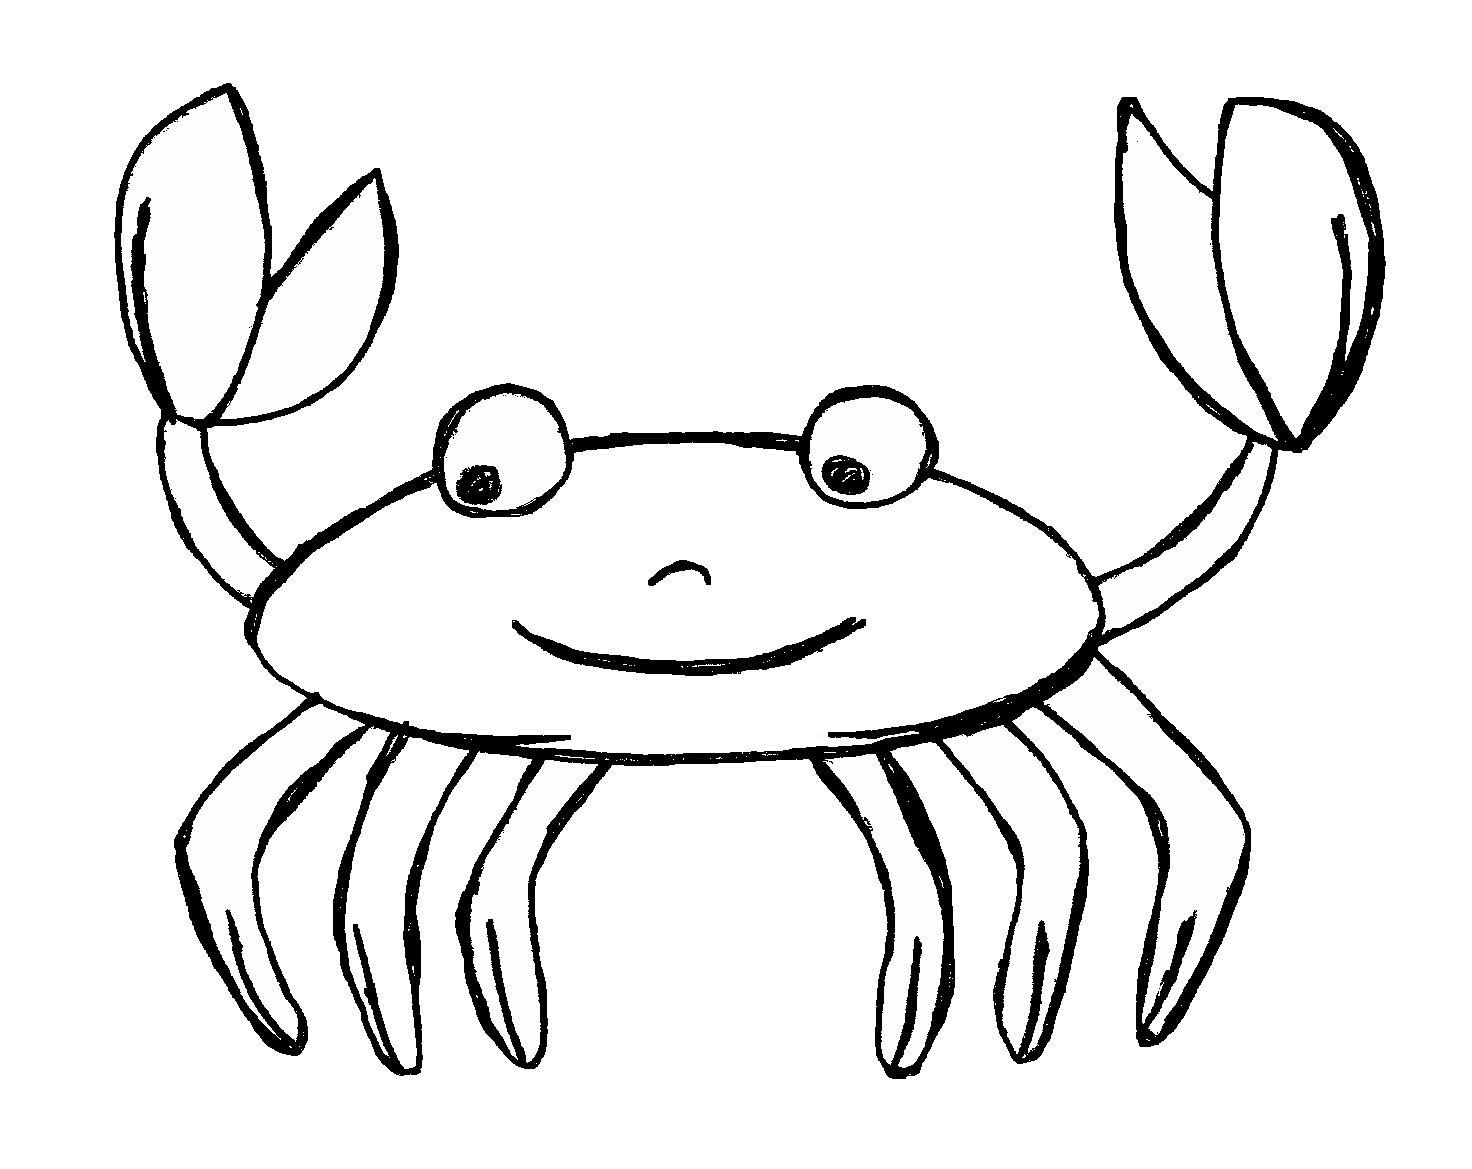 Free Crab Clipart Pictures - Clipartix